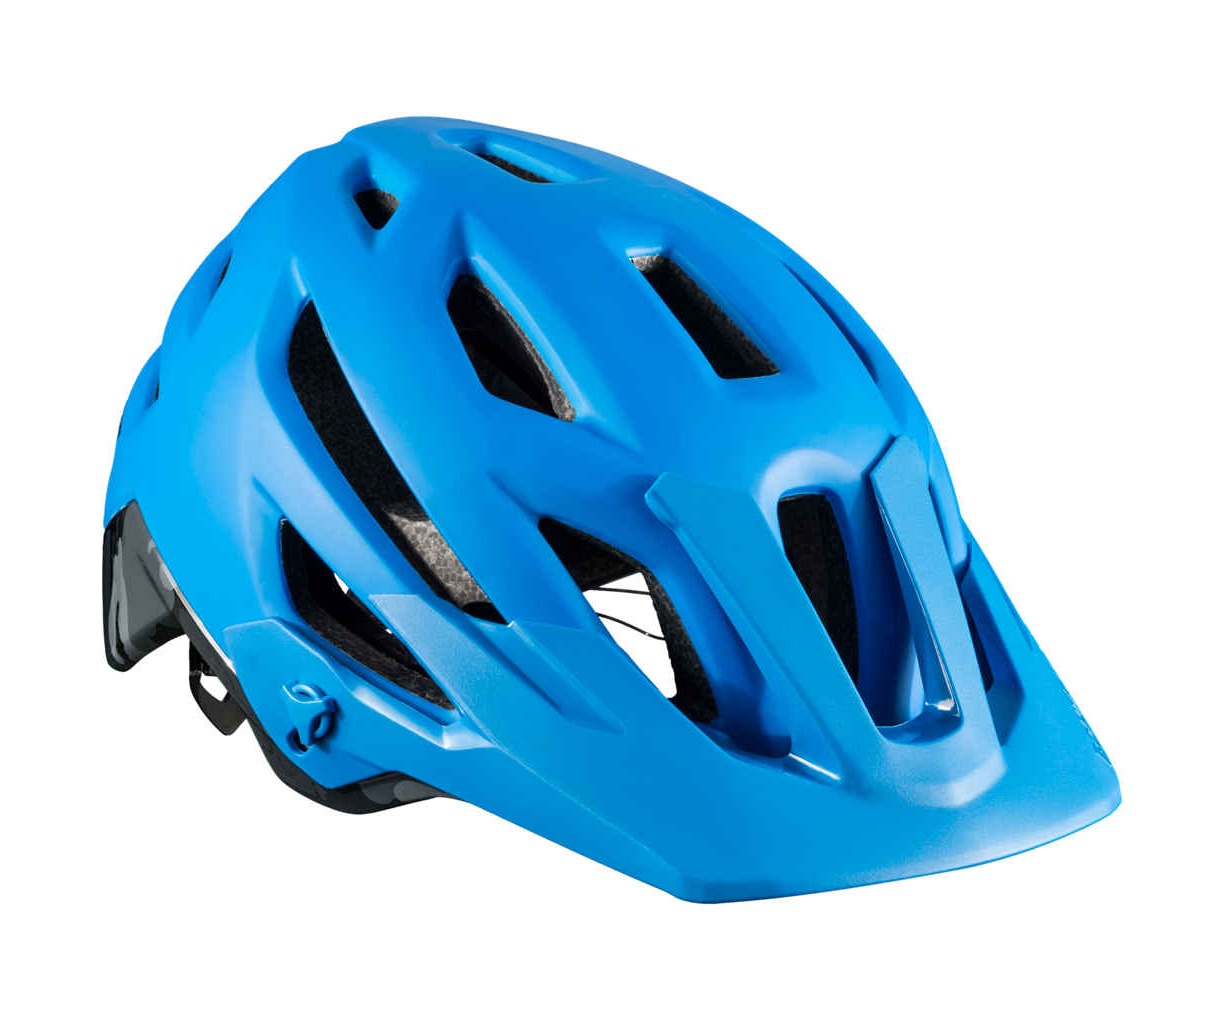 "bontrager rally bike helmet"